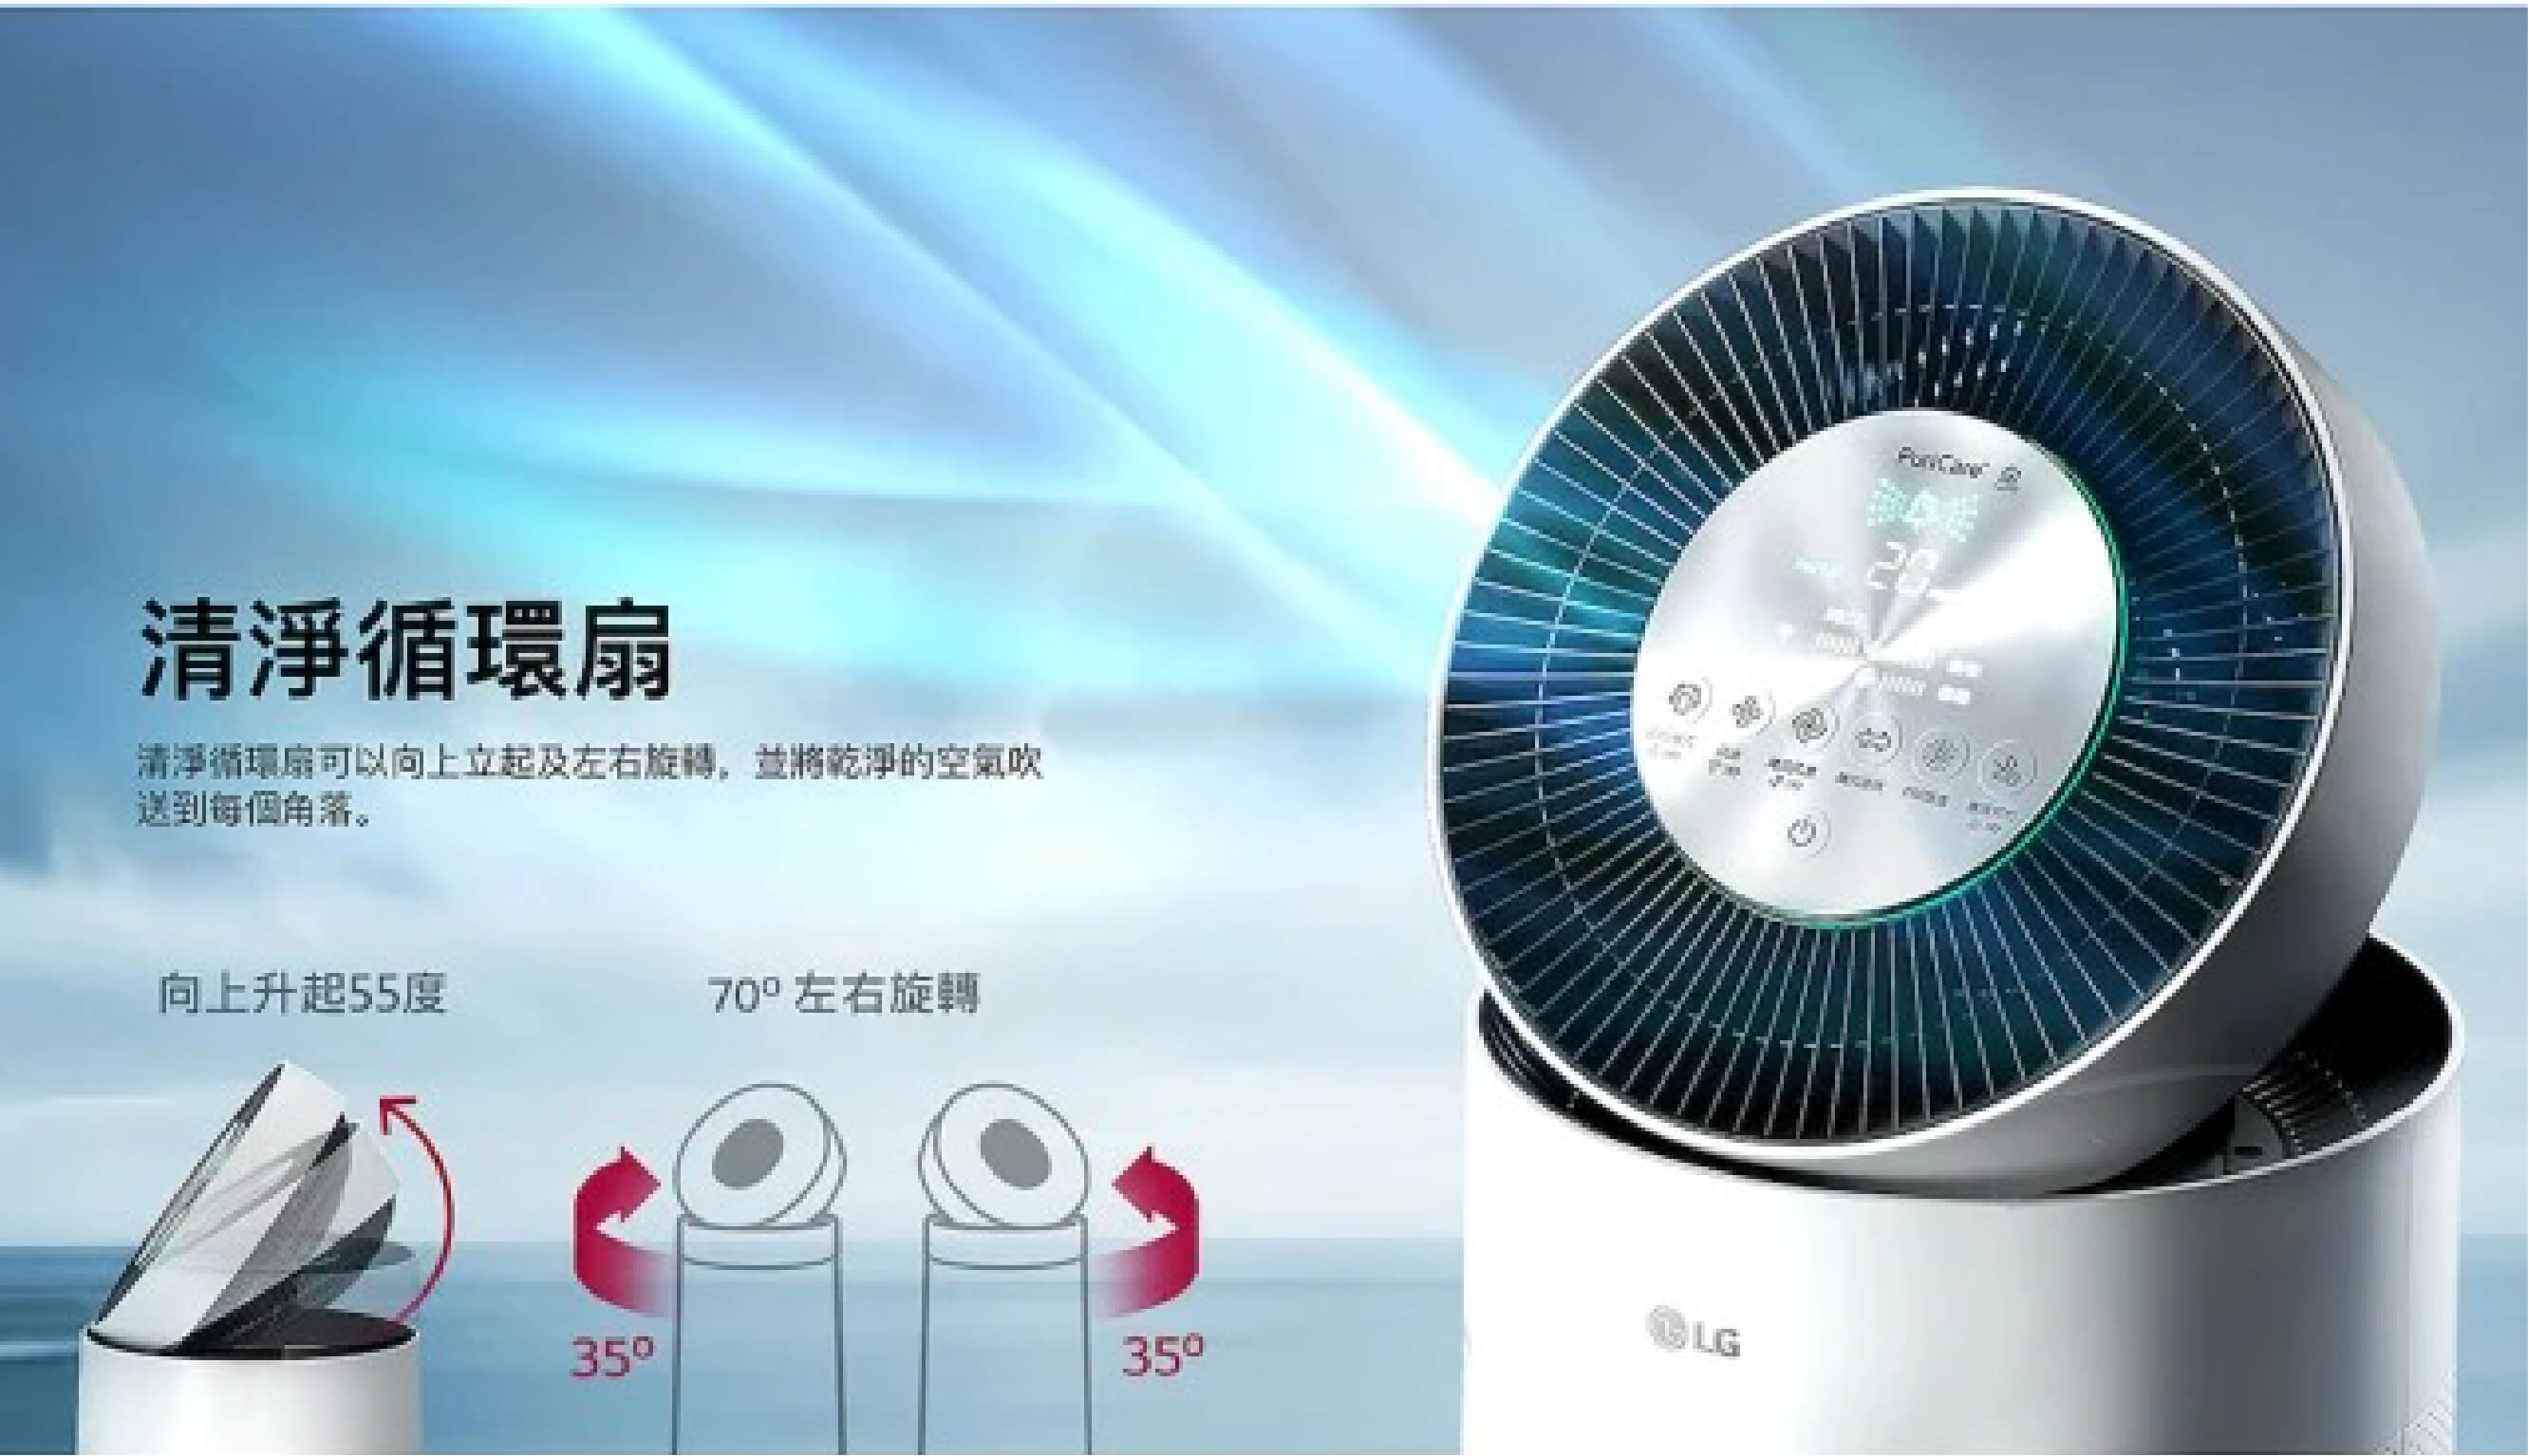 【LG 樂金】PuriCare 360°空氣清淨機 單層(AS601DPT0)